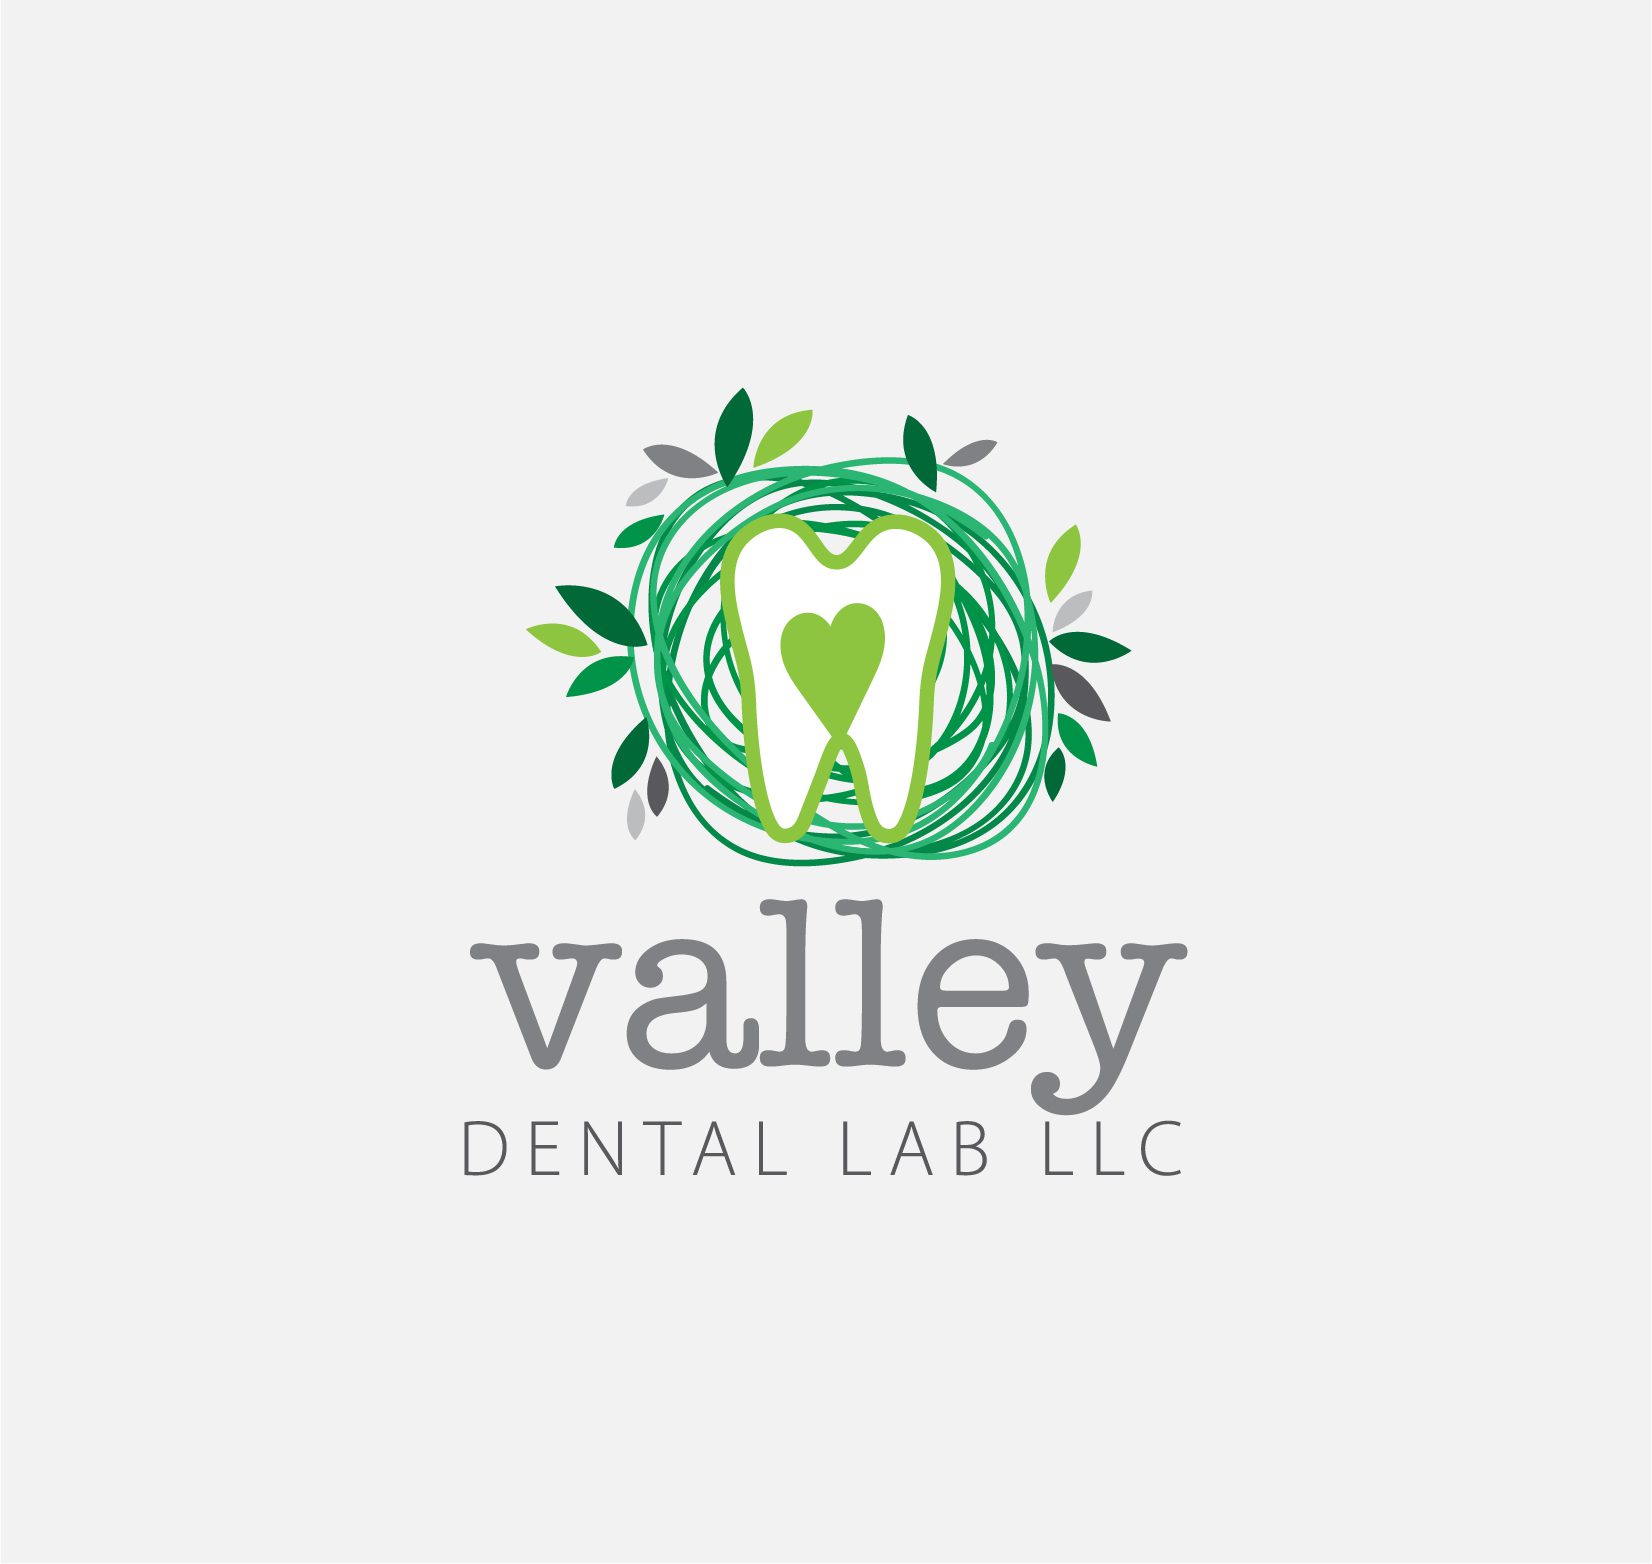 Valley Dental Lab LLC logo